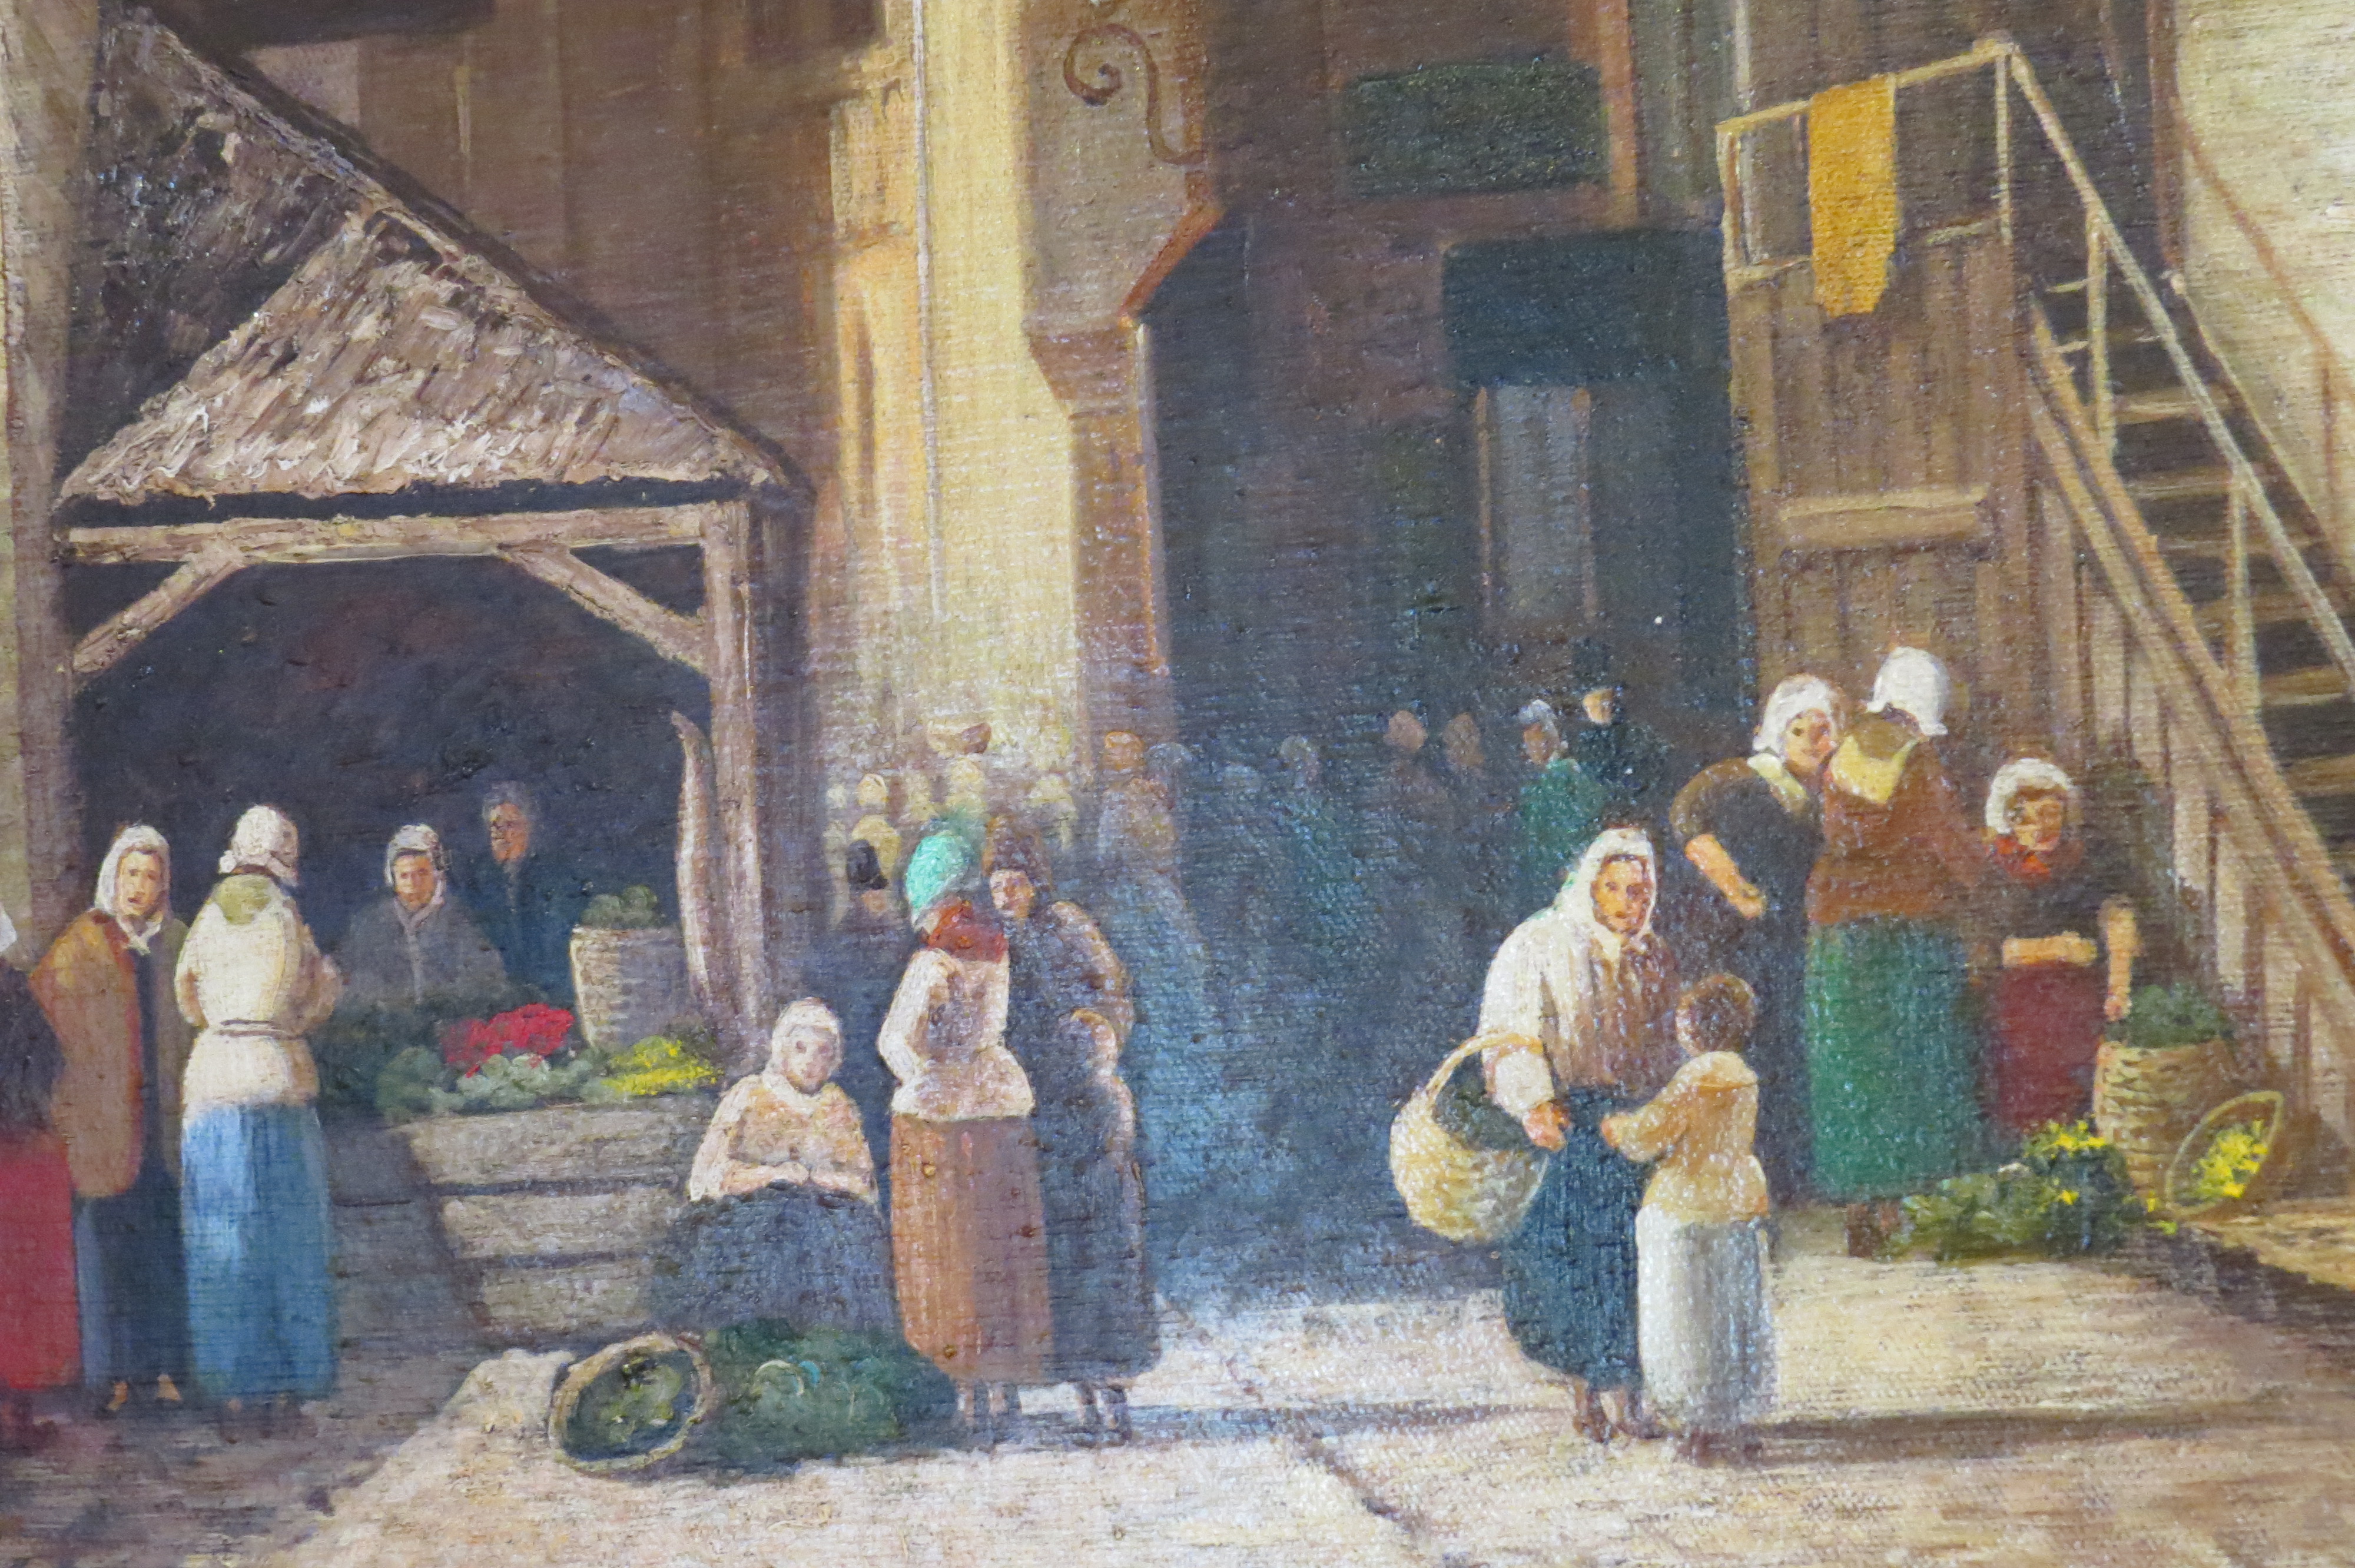 Oil on Canvas of a European City Scene